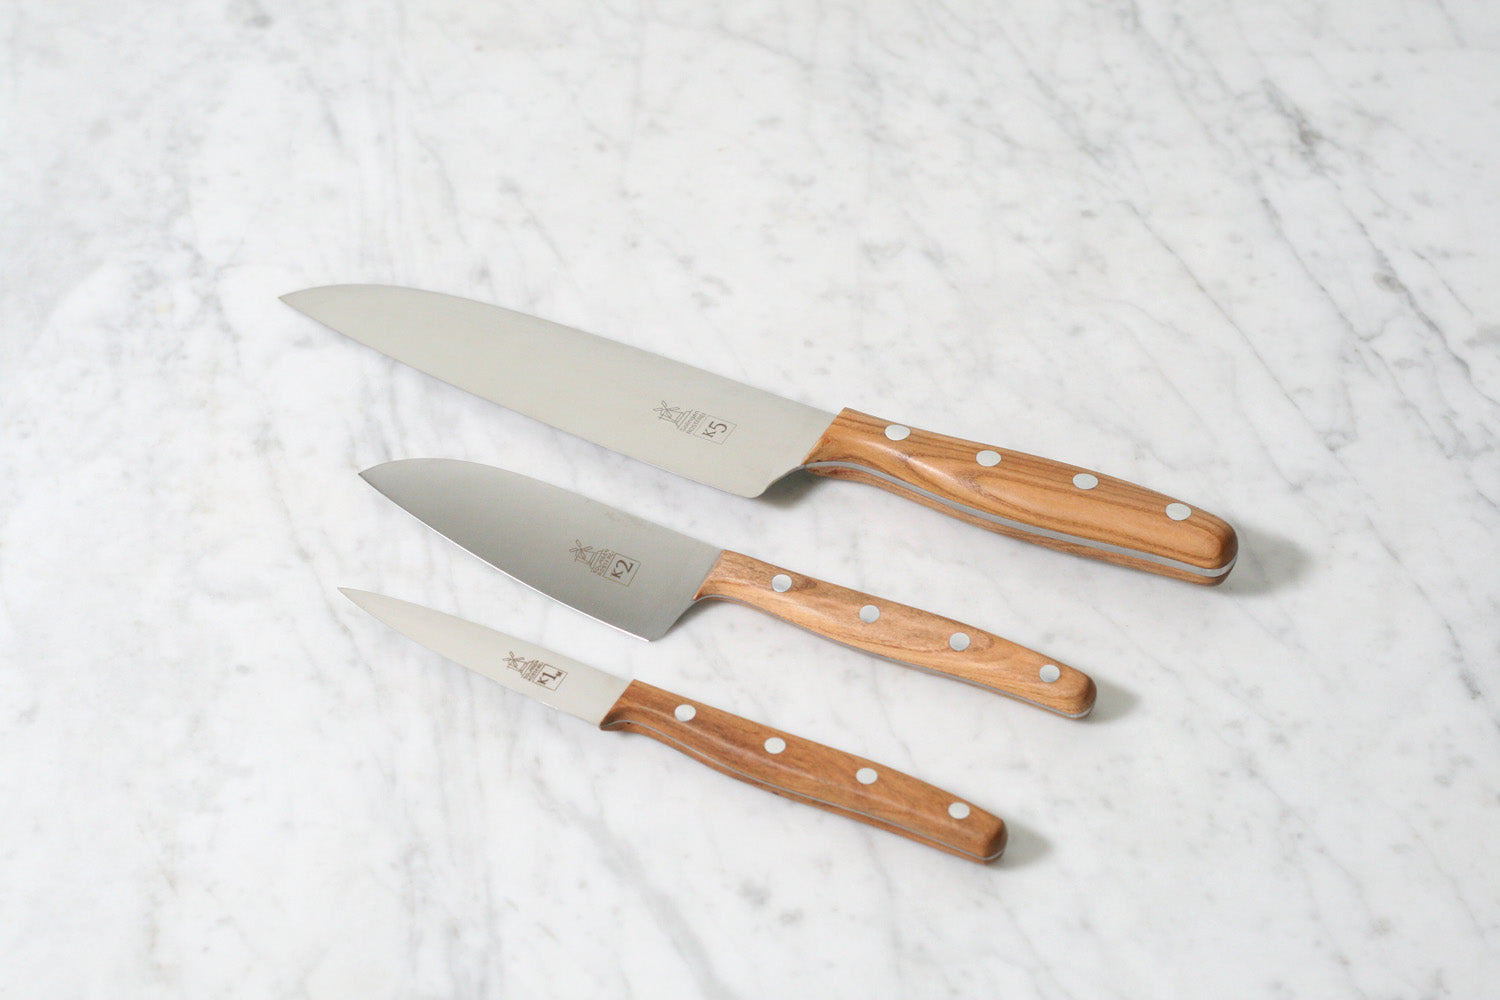 Robert Herder K2 small chef's knife cumarú, 9731163632